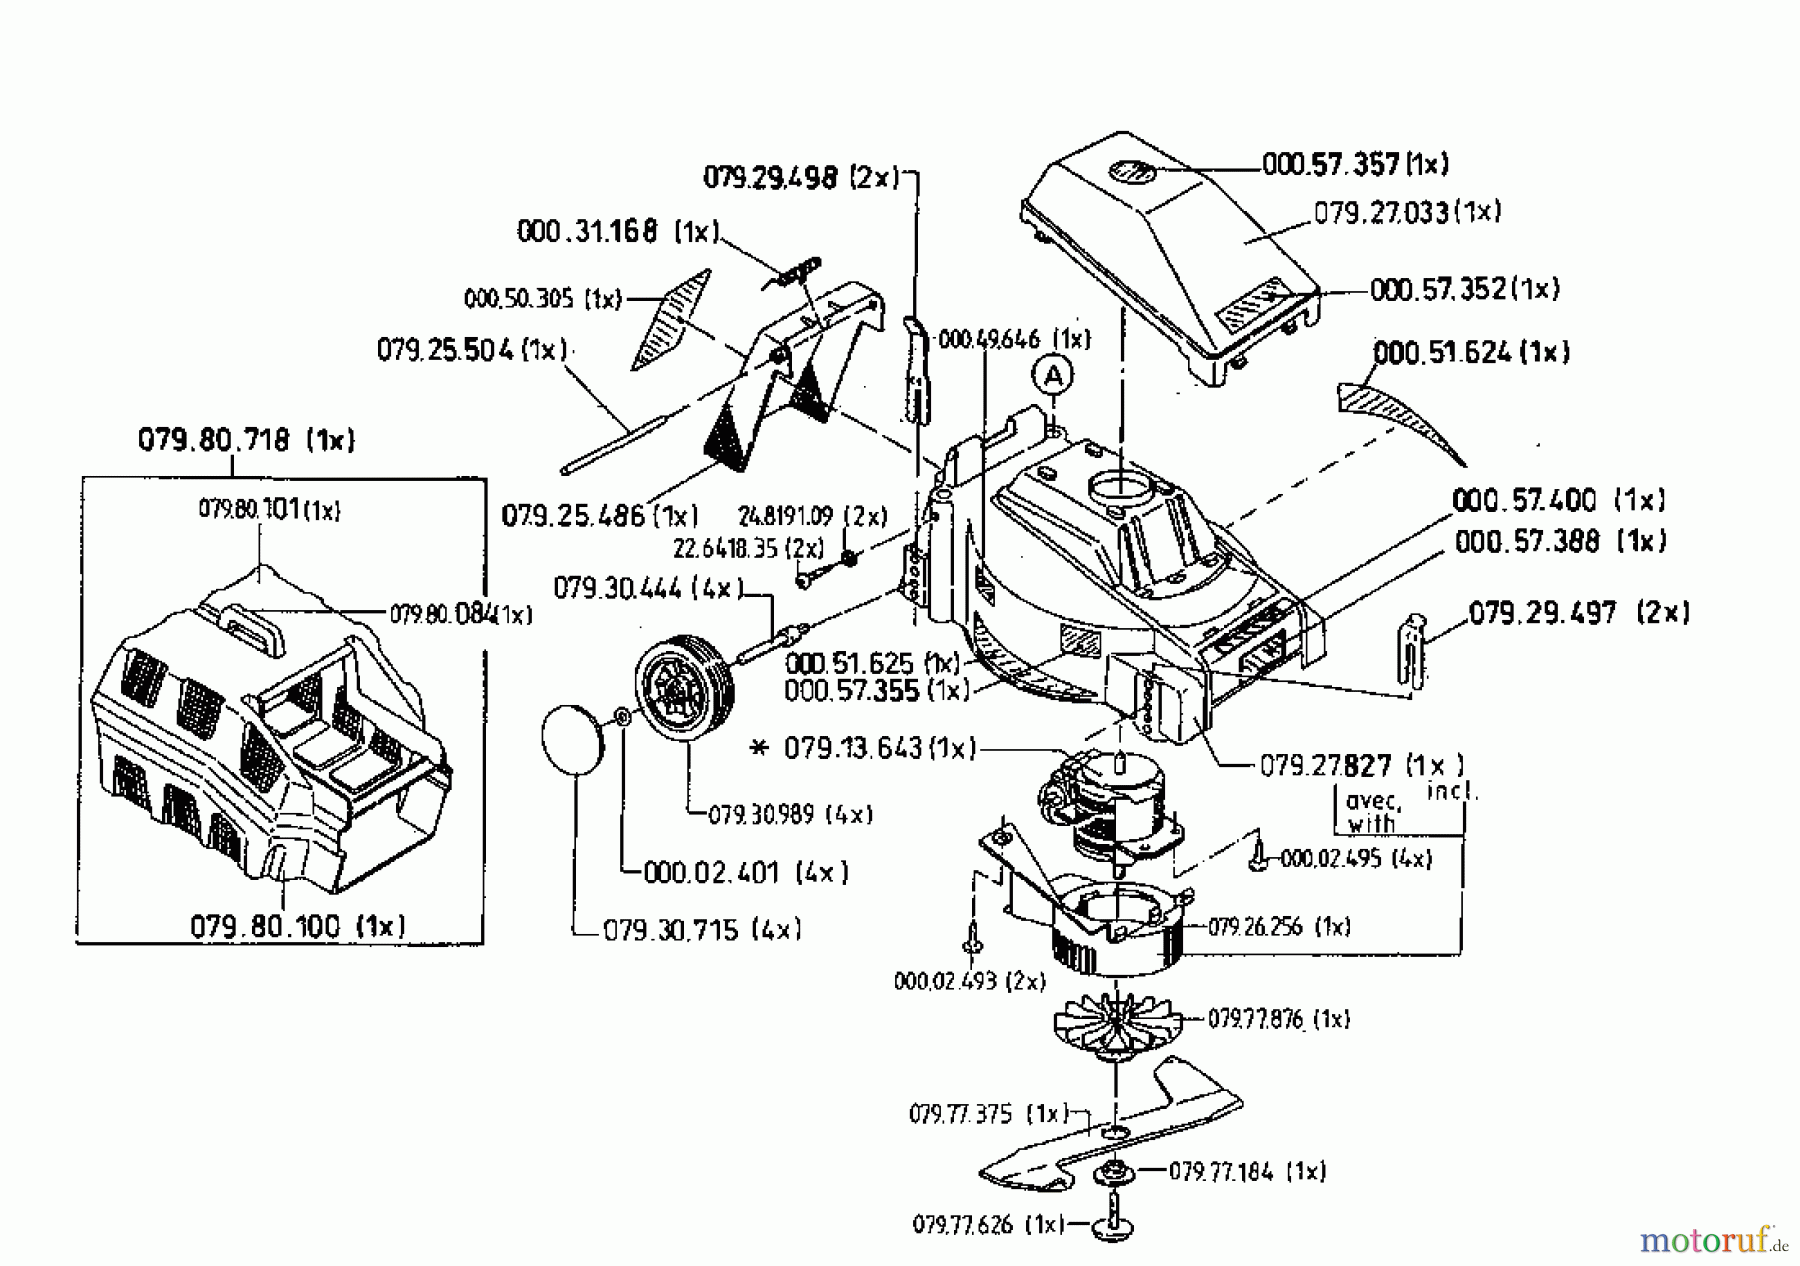  Gutbrod Electric mower GOLDEN SPRINT E 04052.07  (1996) Basic machine